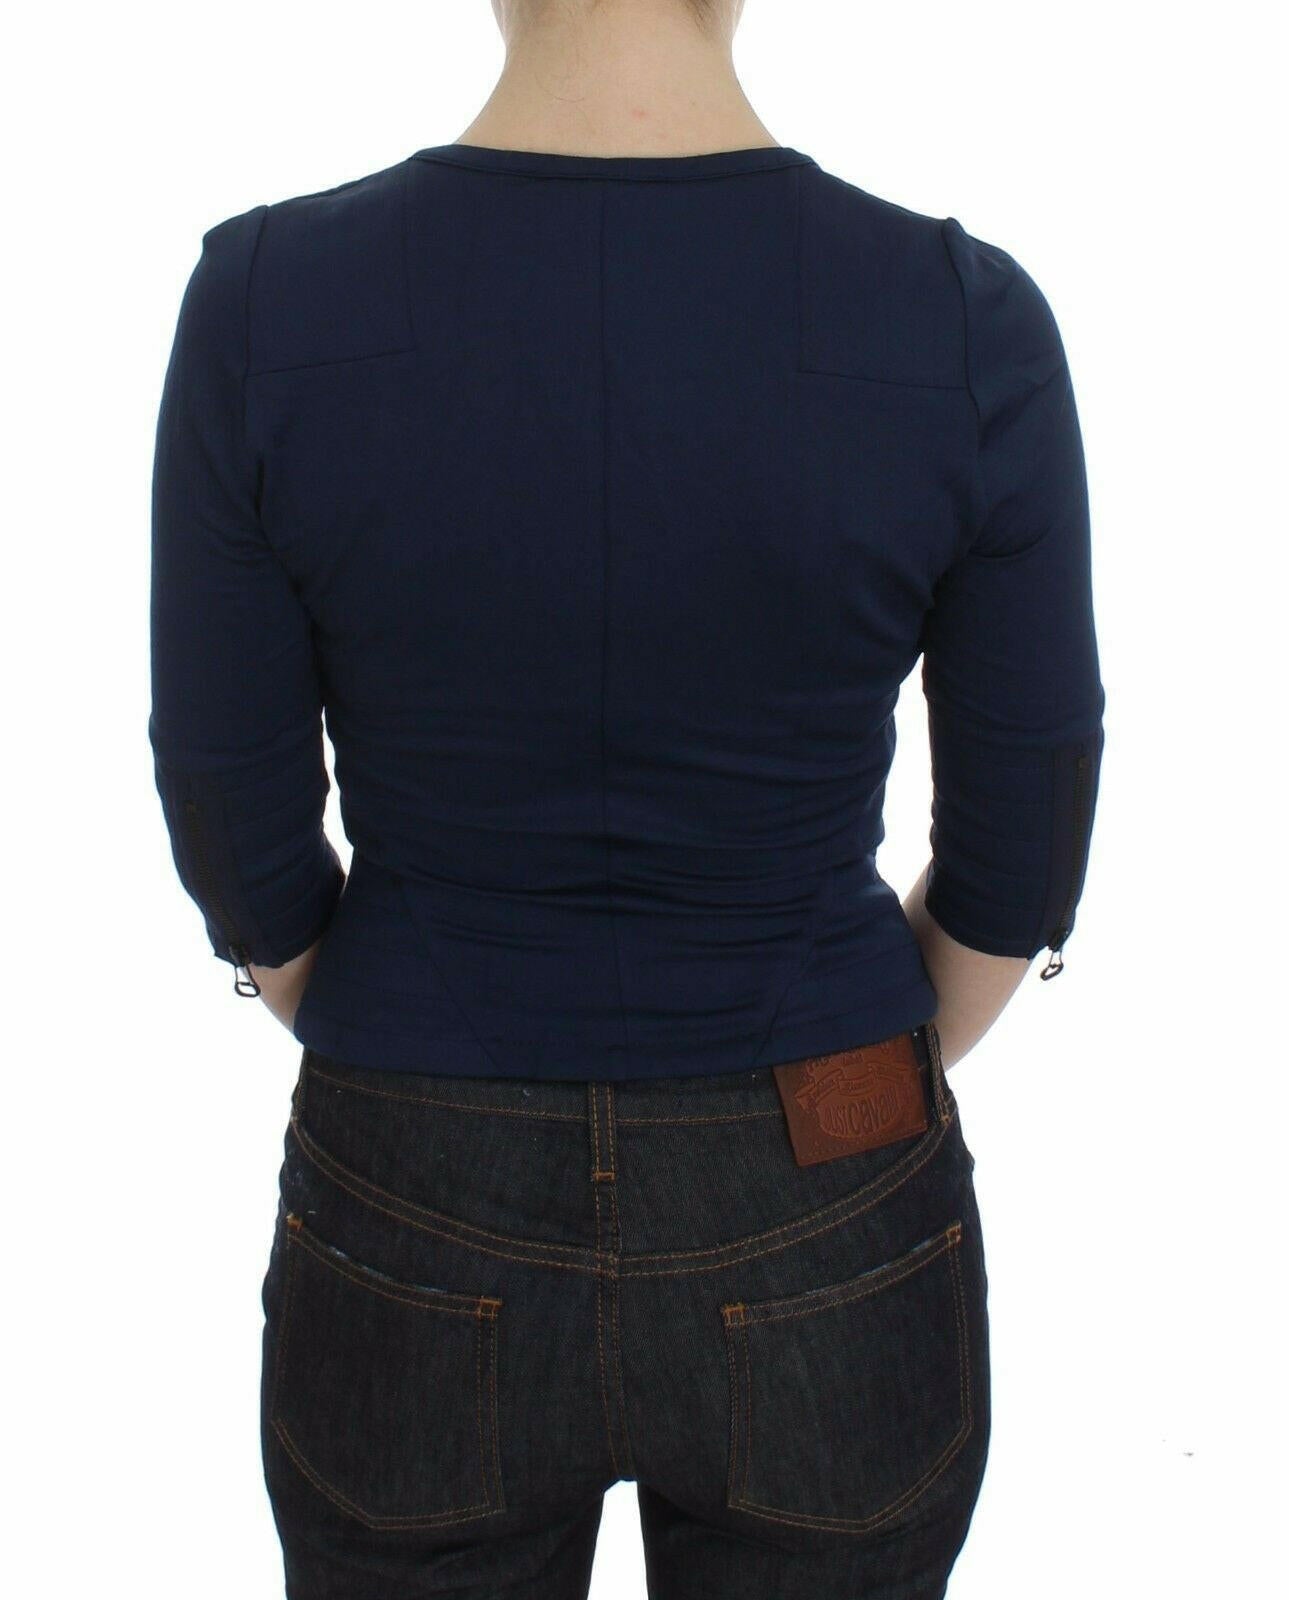 Exte Blue Cotton Top Zipper Deep Crew-neck Sweater - GENUINE AUTHENTIC BRAND LLC  